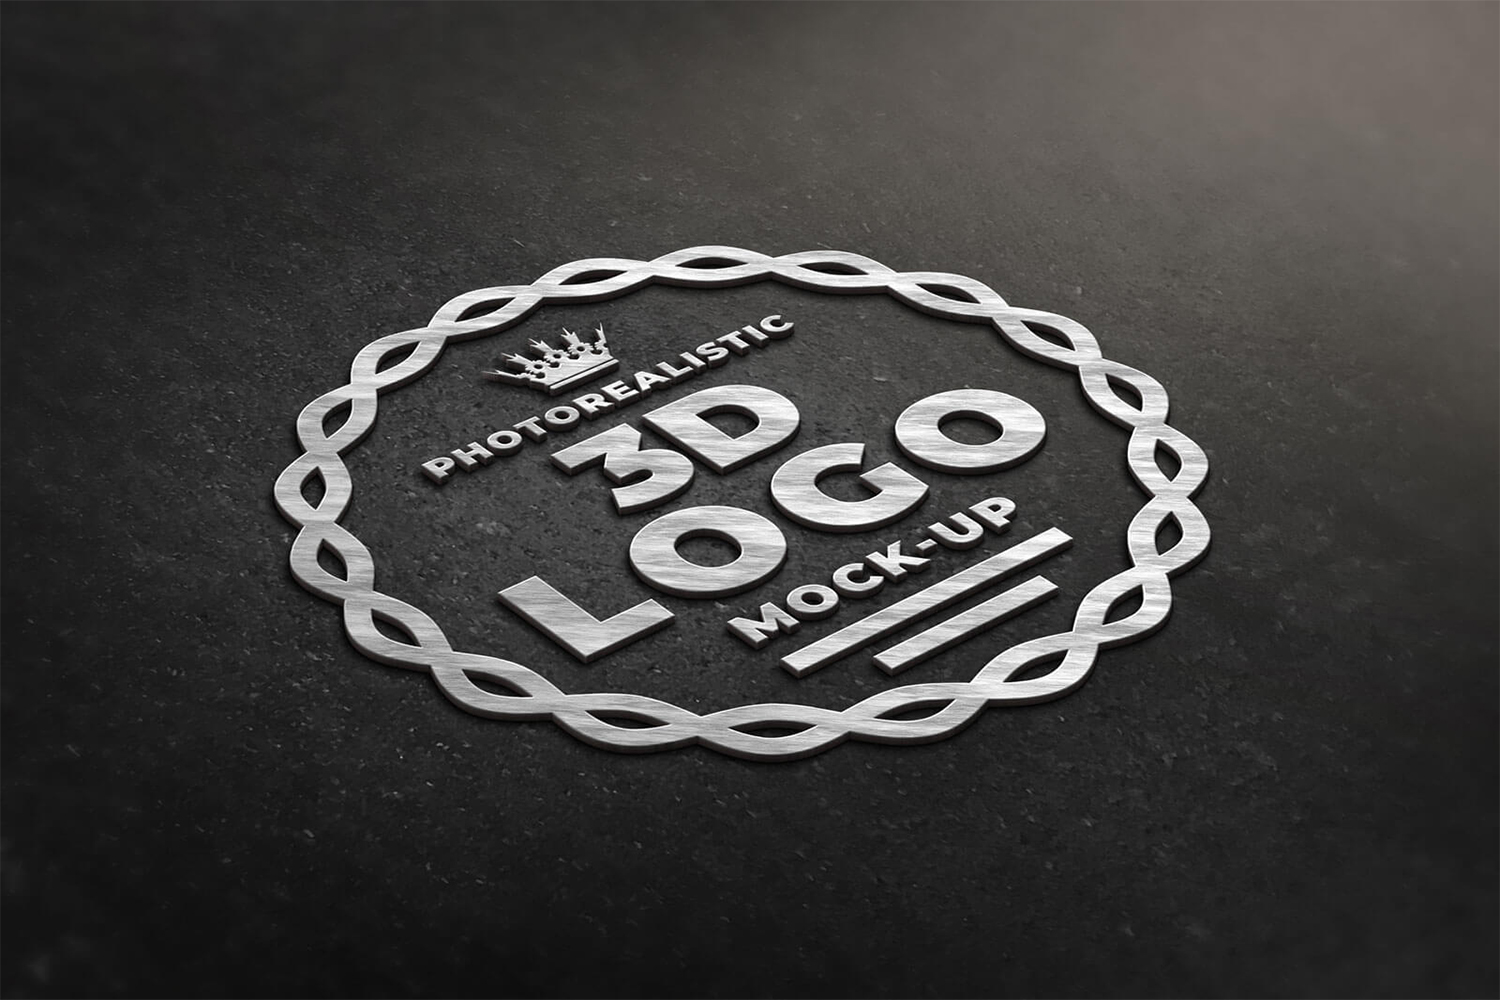 Photorealistic Steel 3D Logo Mockup  Free Download